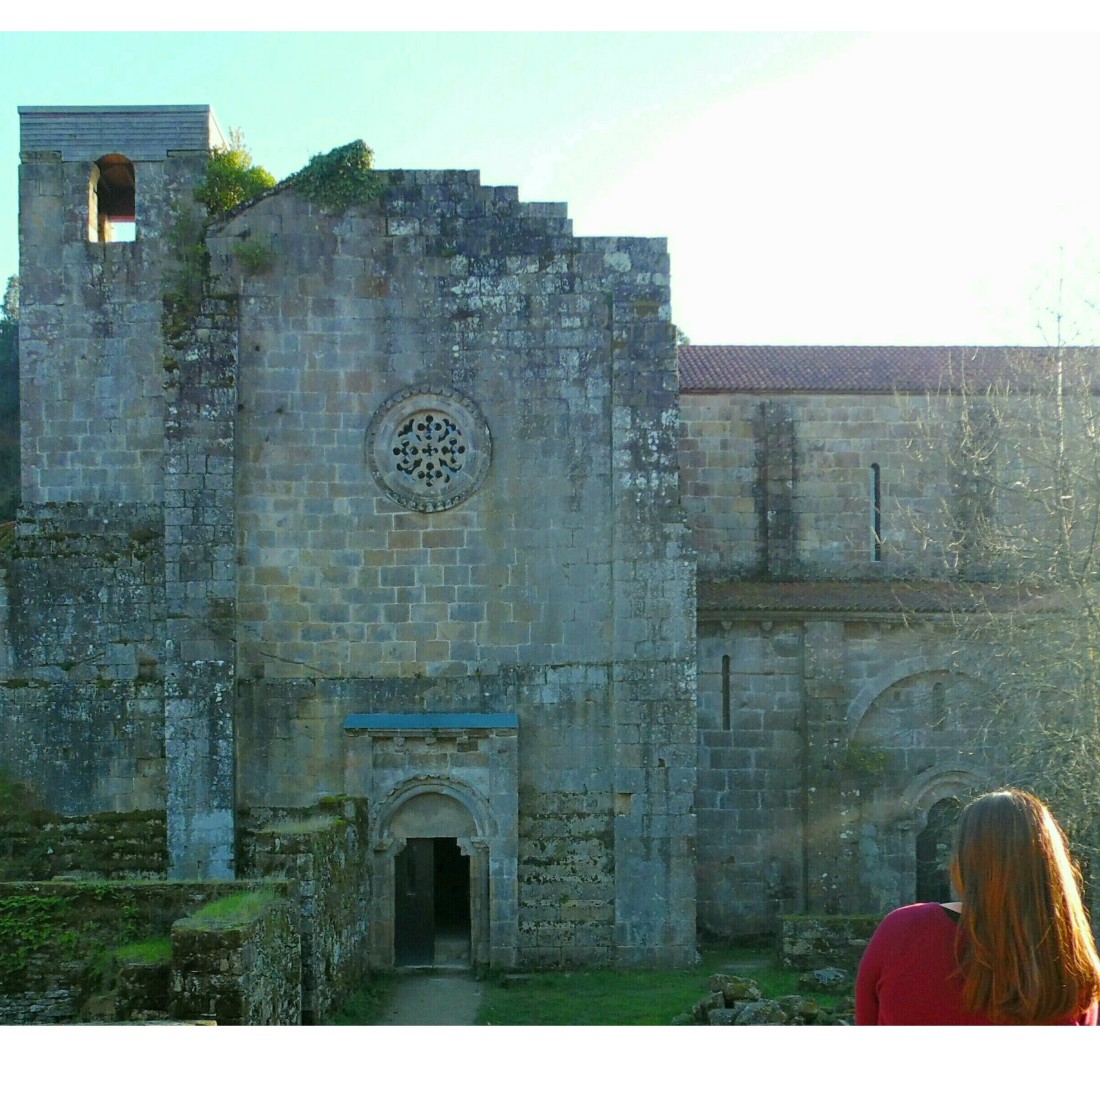 Monasterio de Carboeiro.